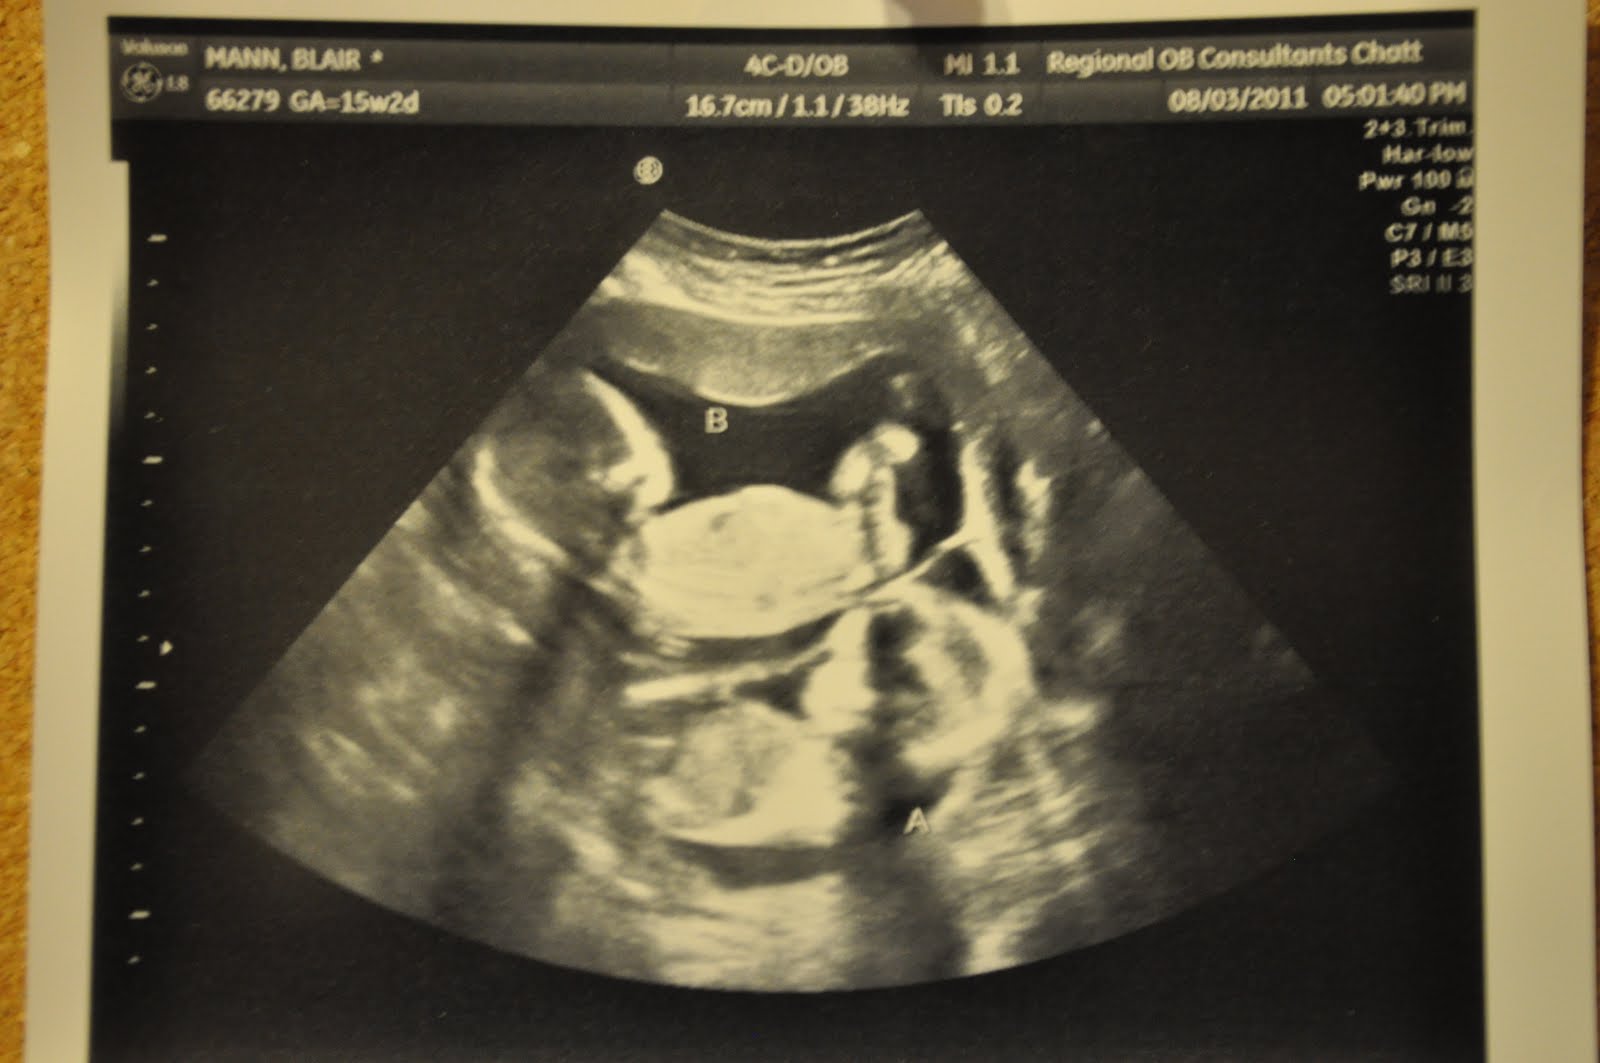 4d ultrasound at 15 weeks